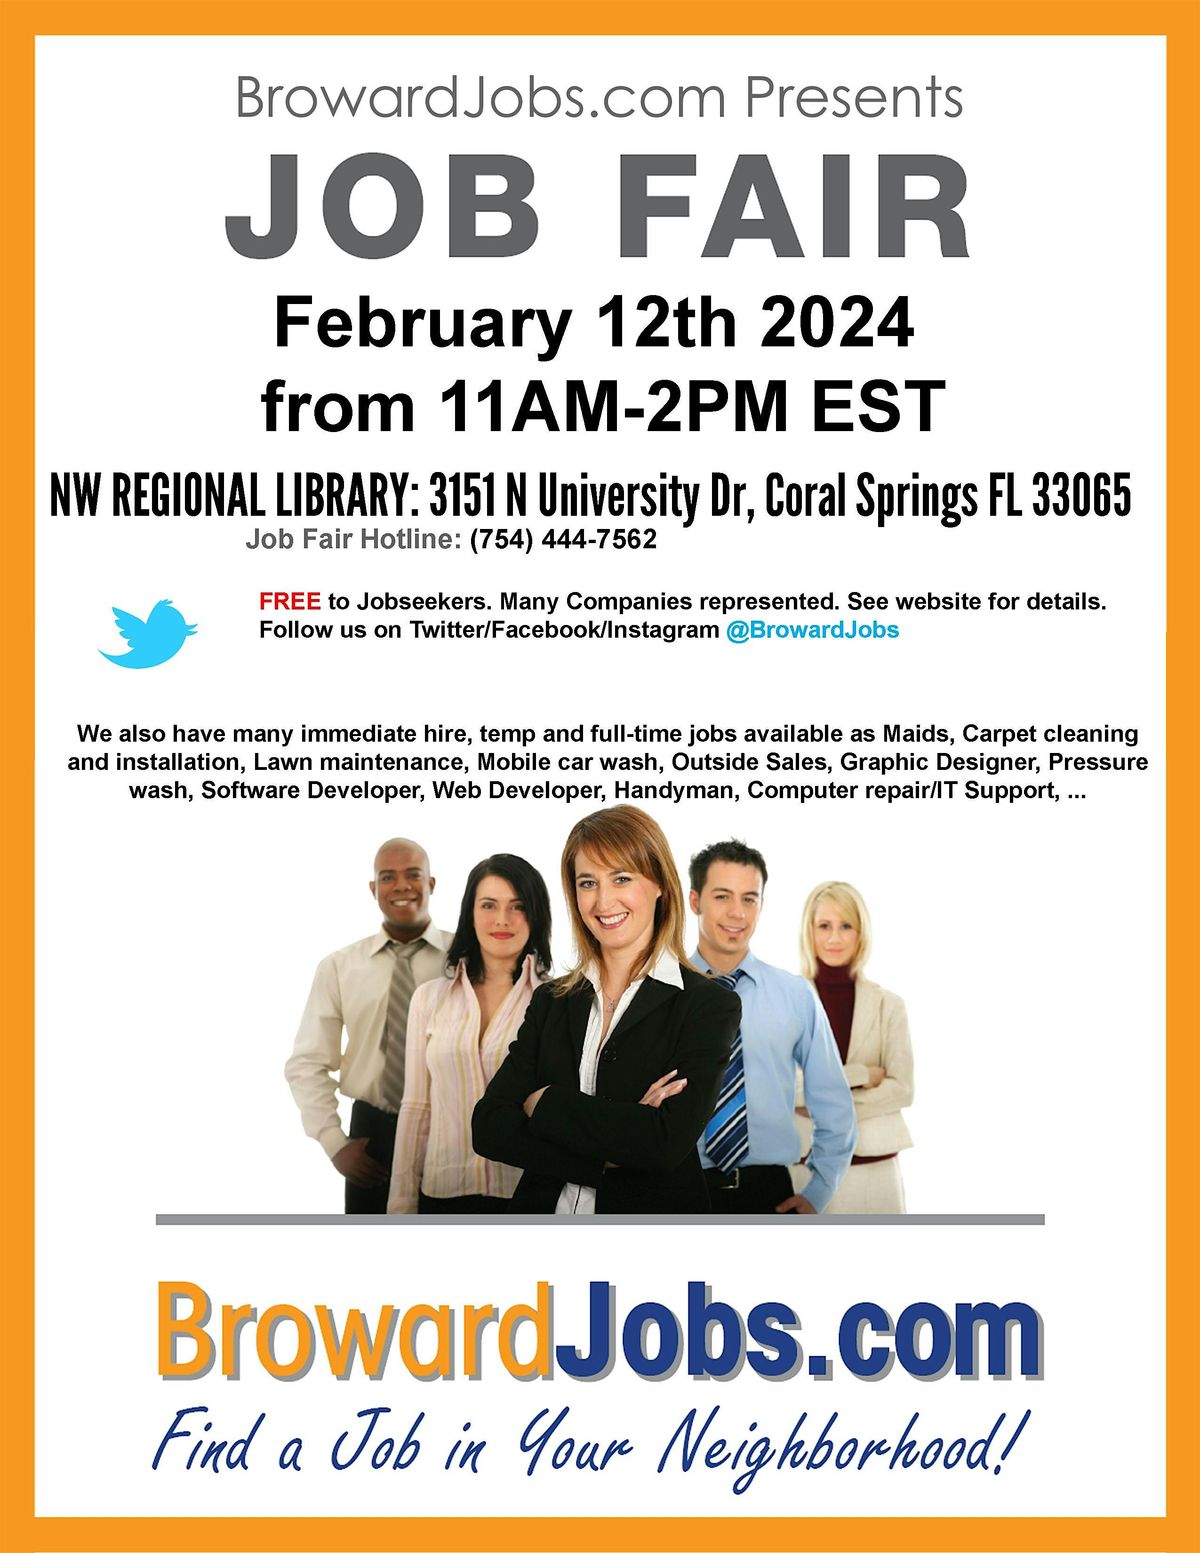 BrowardJobs.com Job Fair \/ Career Fair June 24th,  2024  Coral Springs, Fl